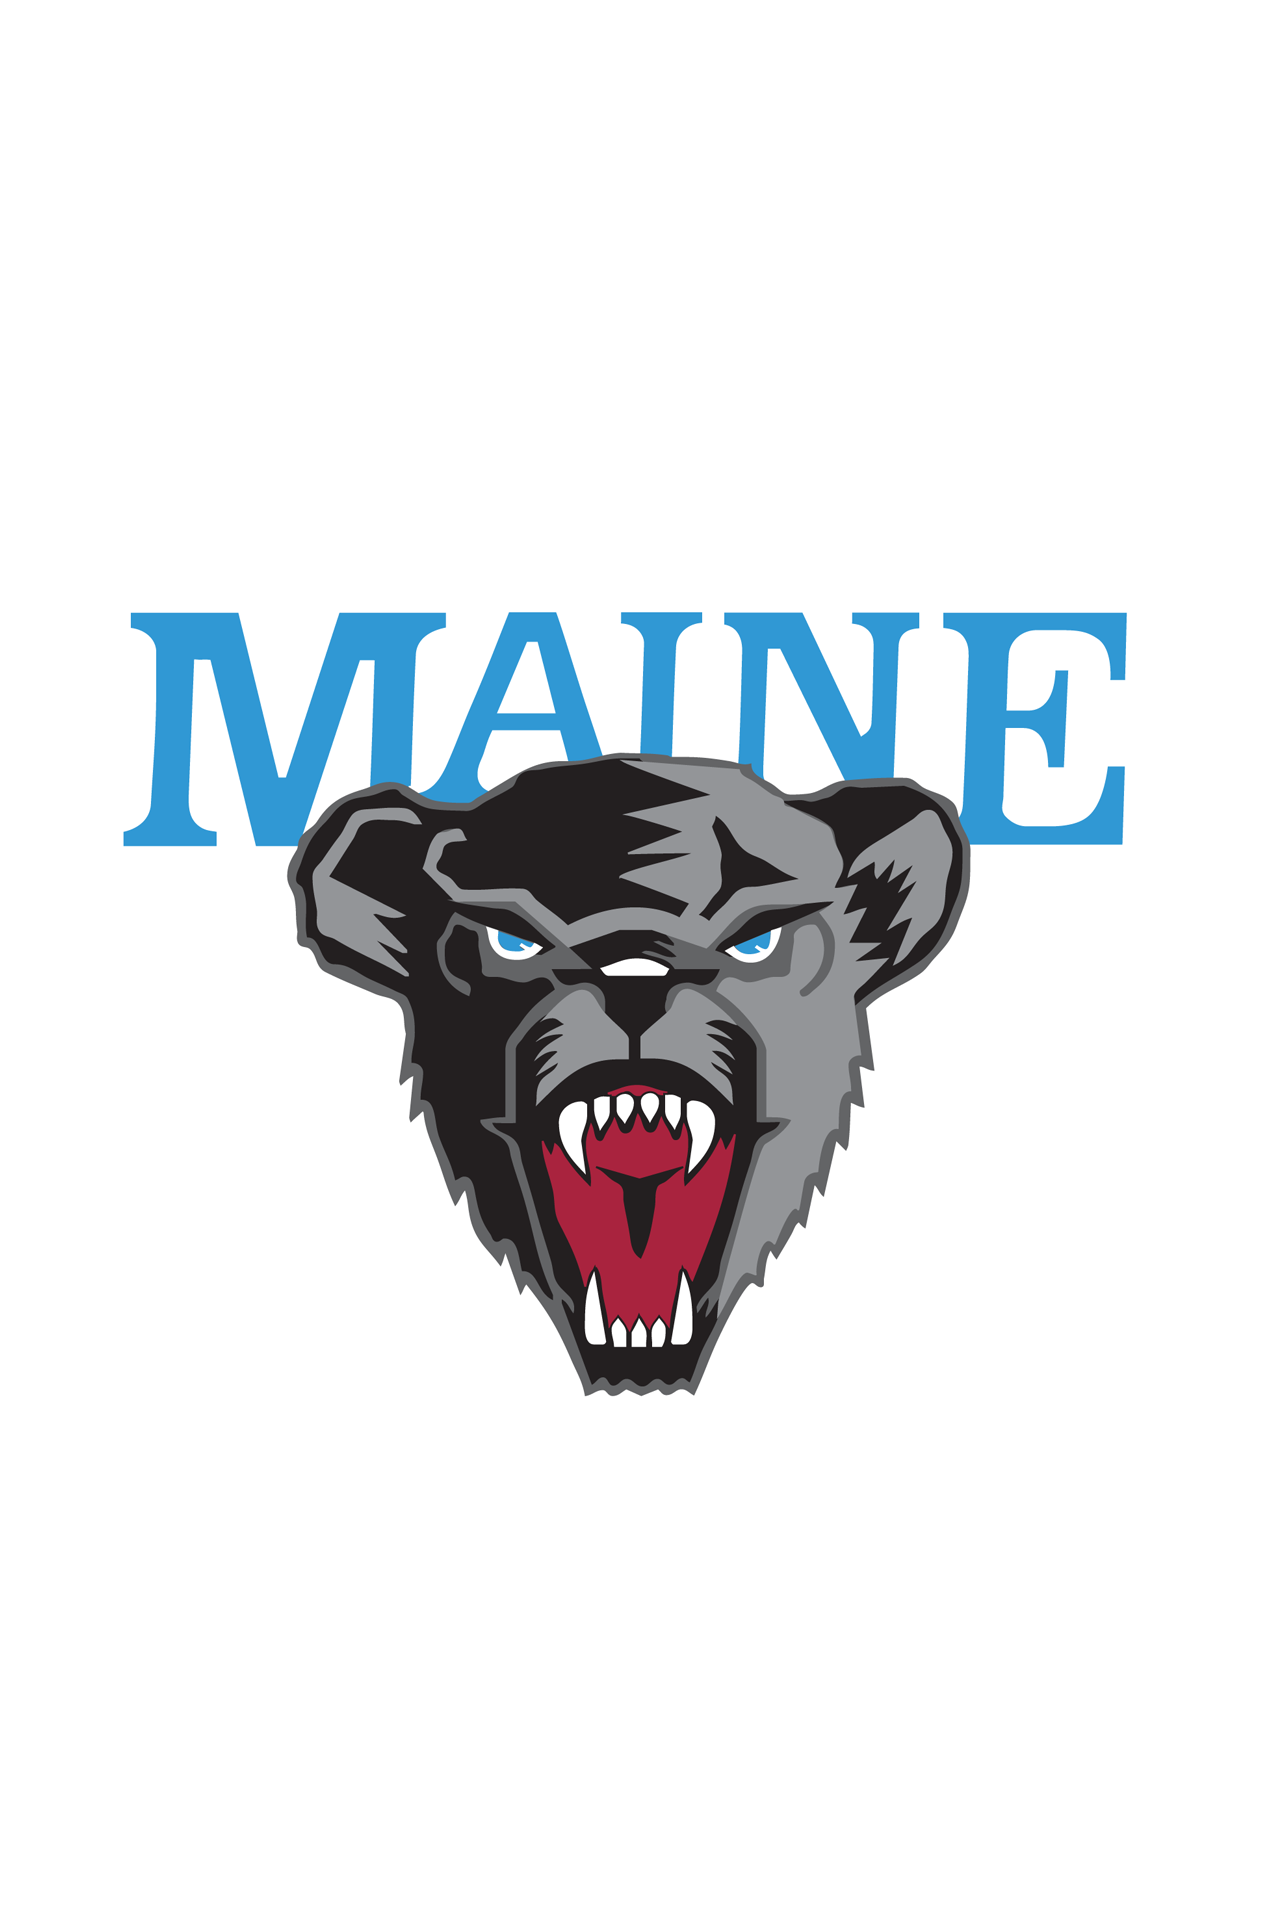 Maine Black Bears Basketball - Black Bears News, Scores, Stats